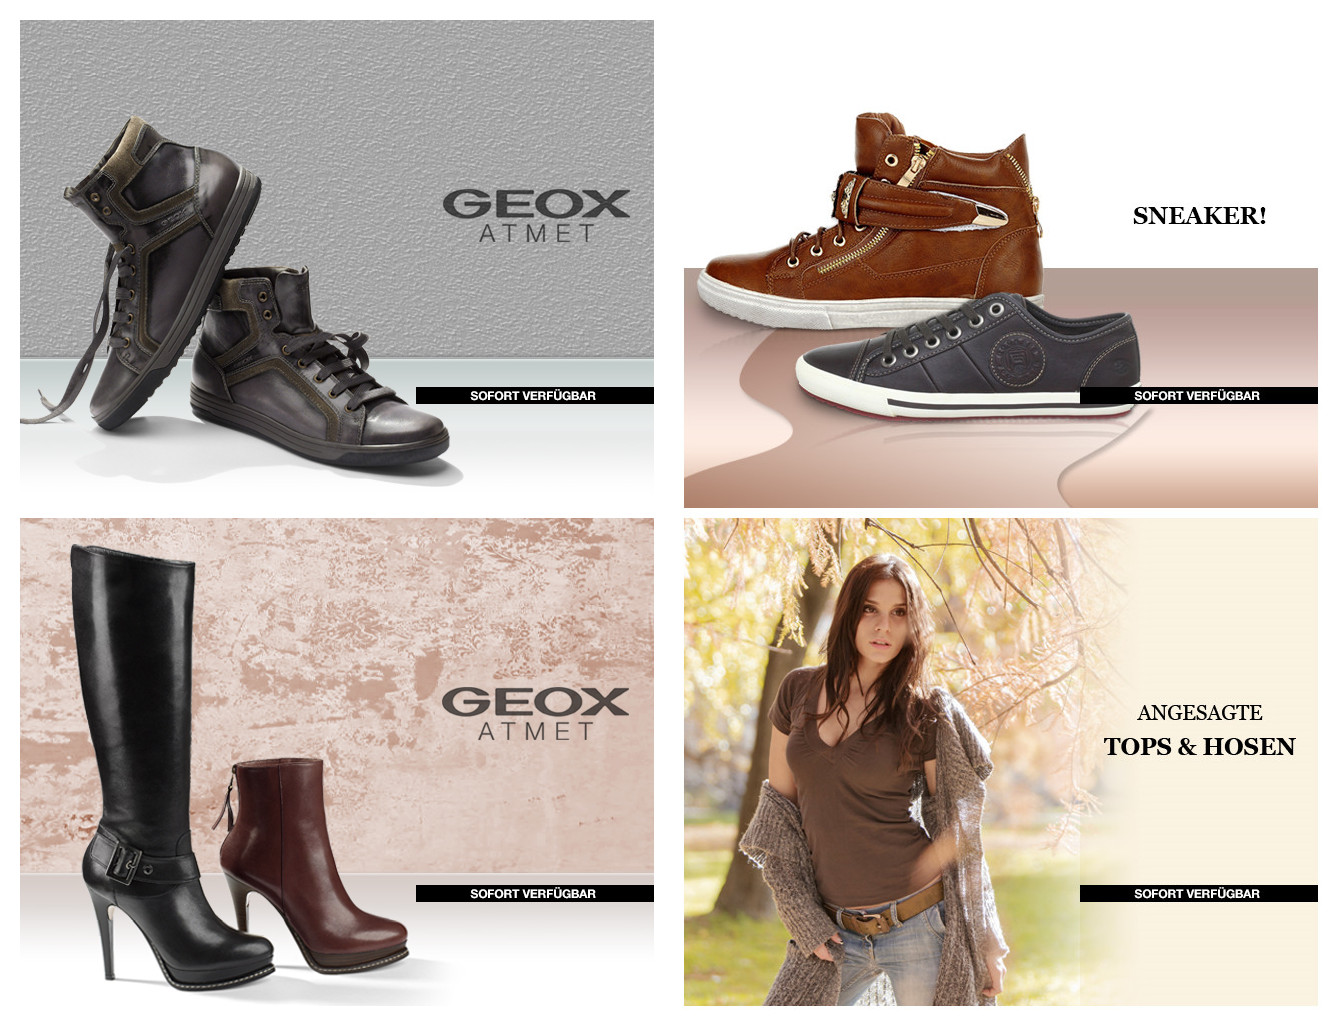 Geox 男女鞋/vans等多个品牌休闲鞋/EA7等大牌女式上衣及裤子专场